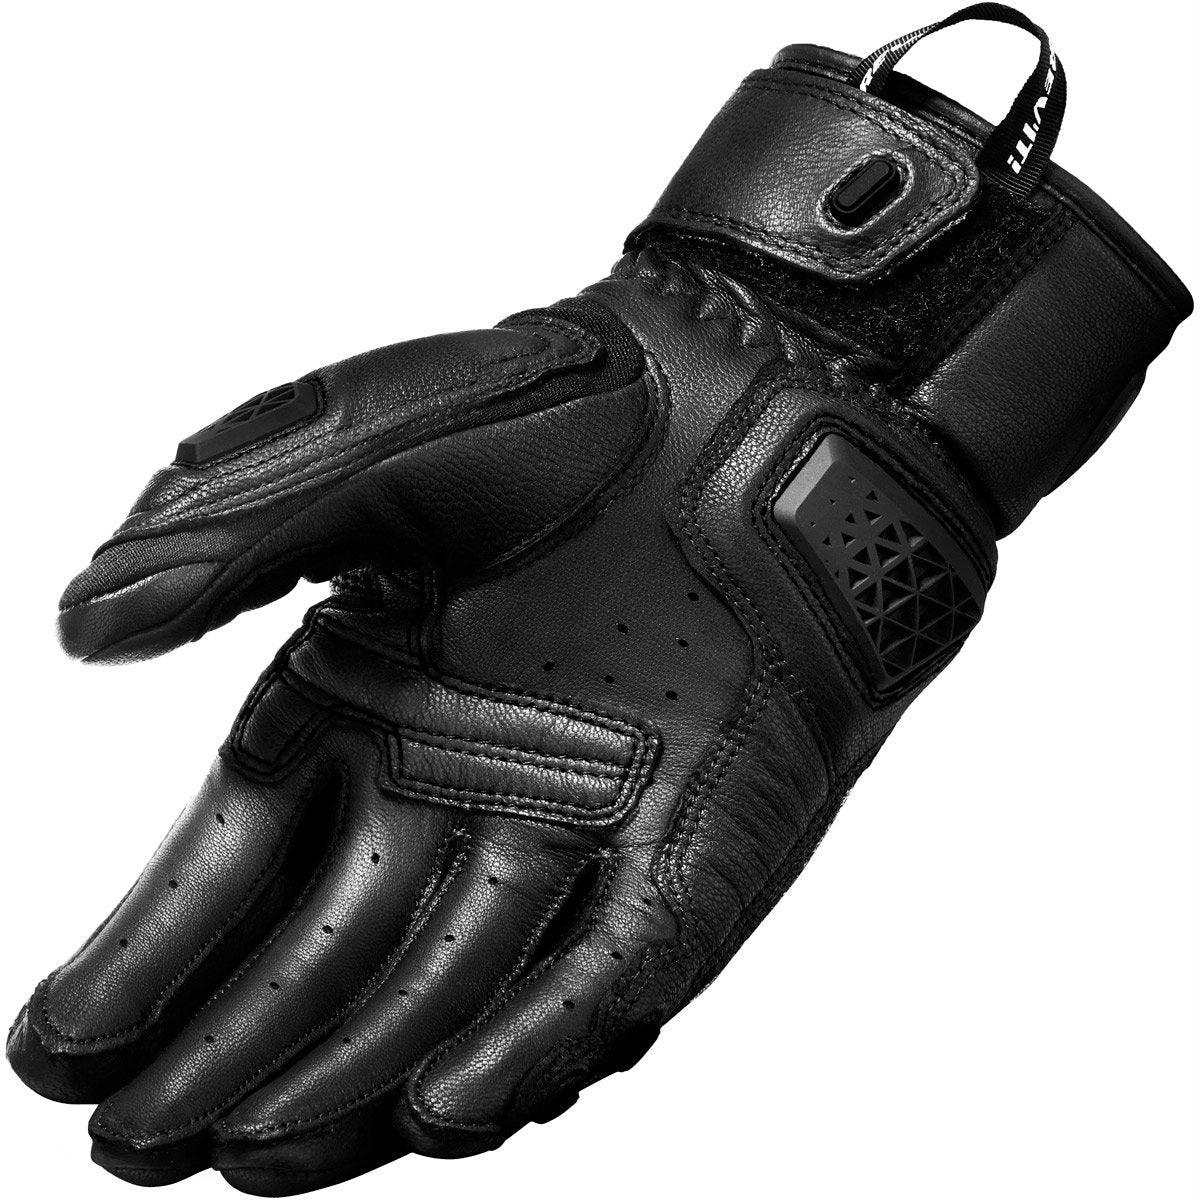 Rev It! Sand 4 Gloves Black - Mesh Motorcycle Gloves